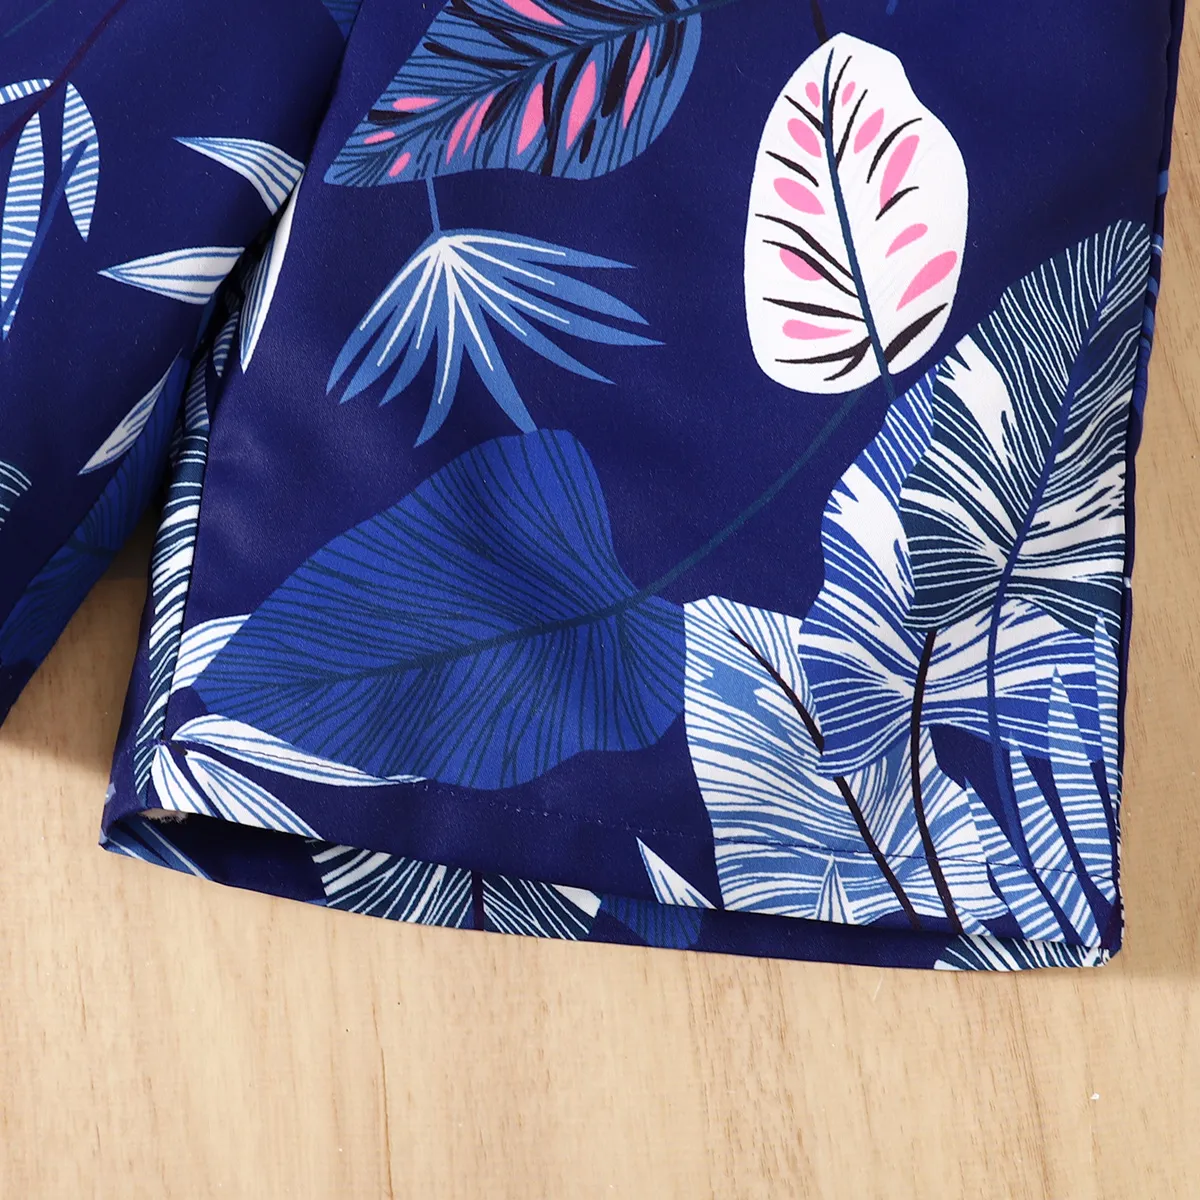 2pcs Kid Boy Tropical Plant Print Short-sleeve Tee and Shorts Set Black big image 1